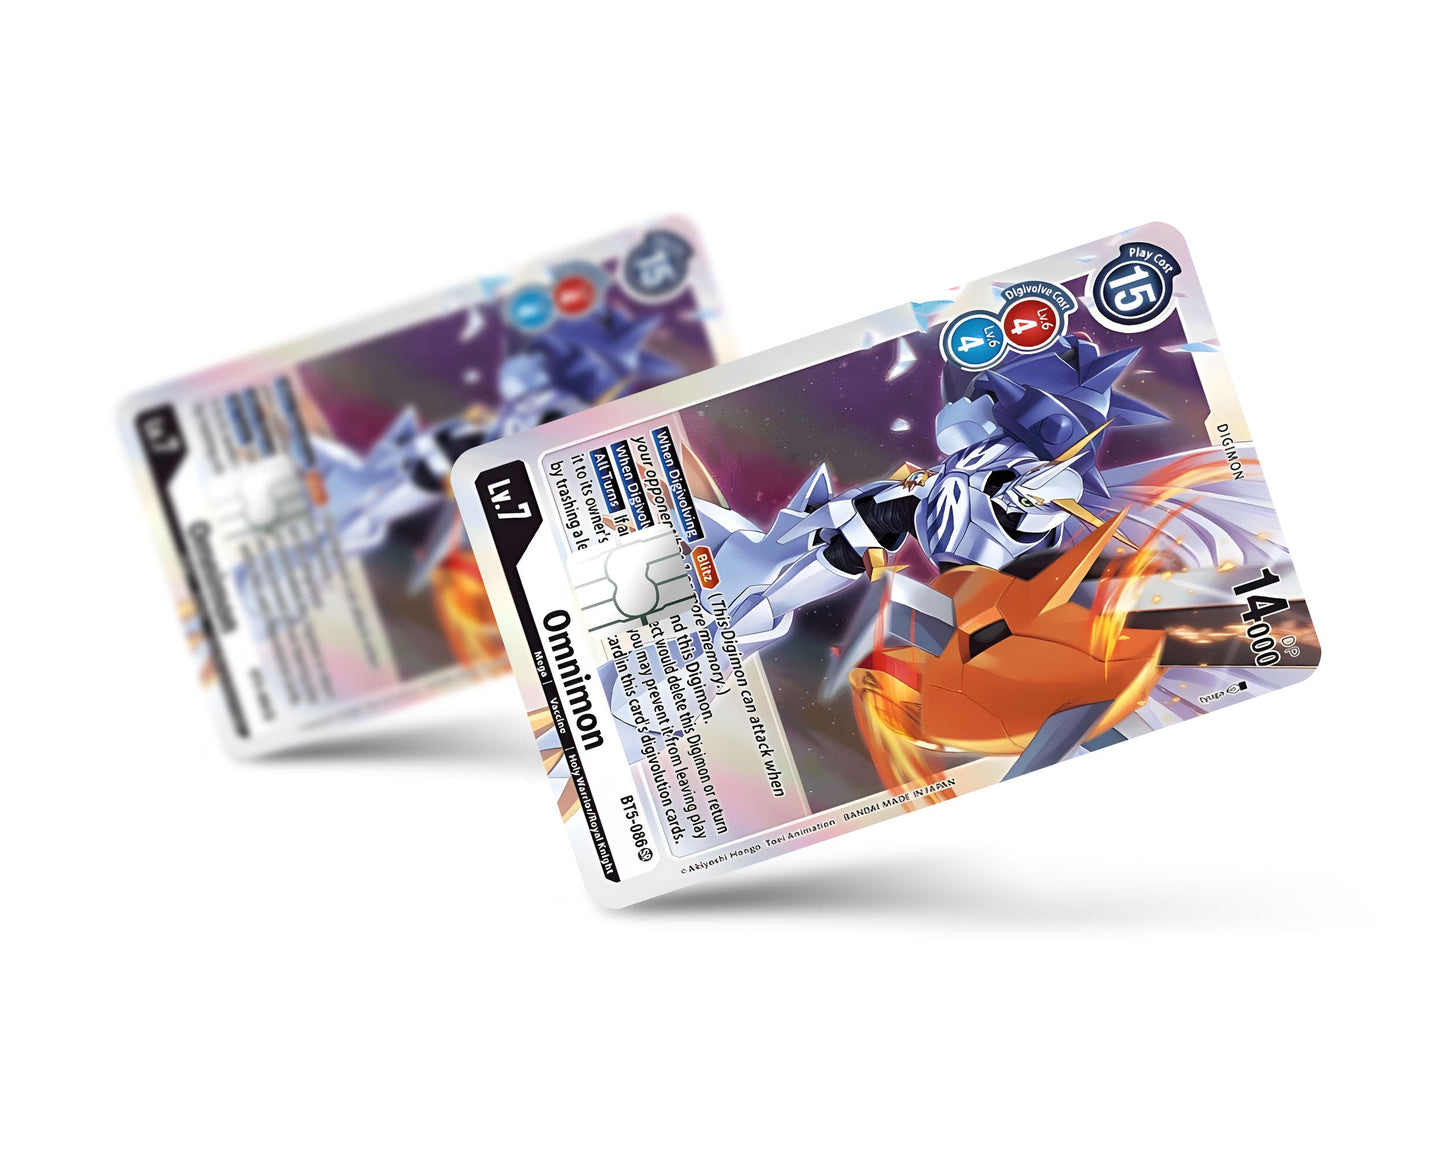 Omnimon Limited Edition Digimon Card Credit Card Credit Card Skin